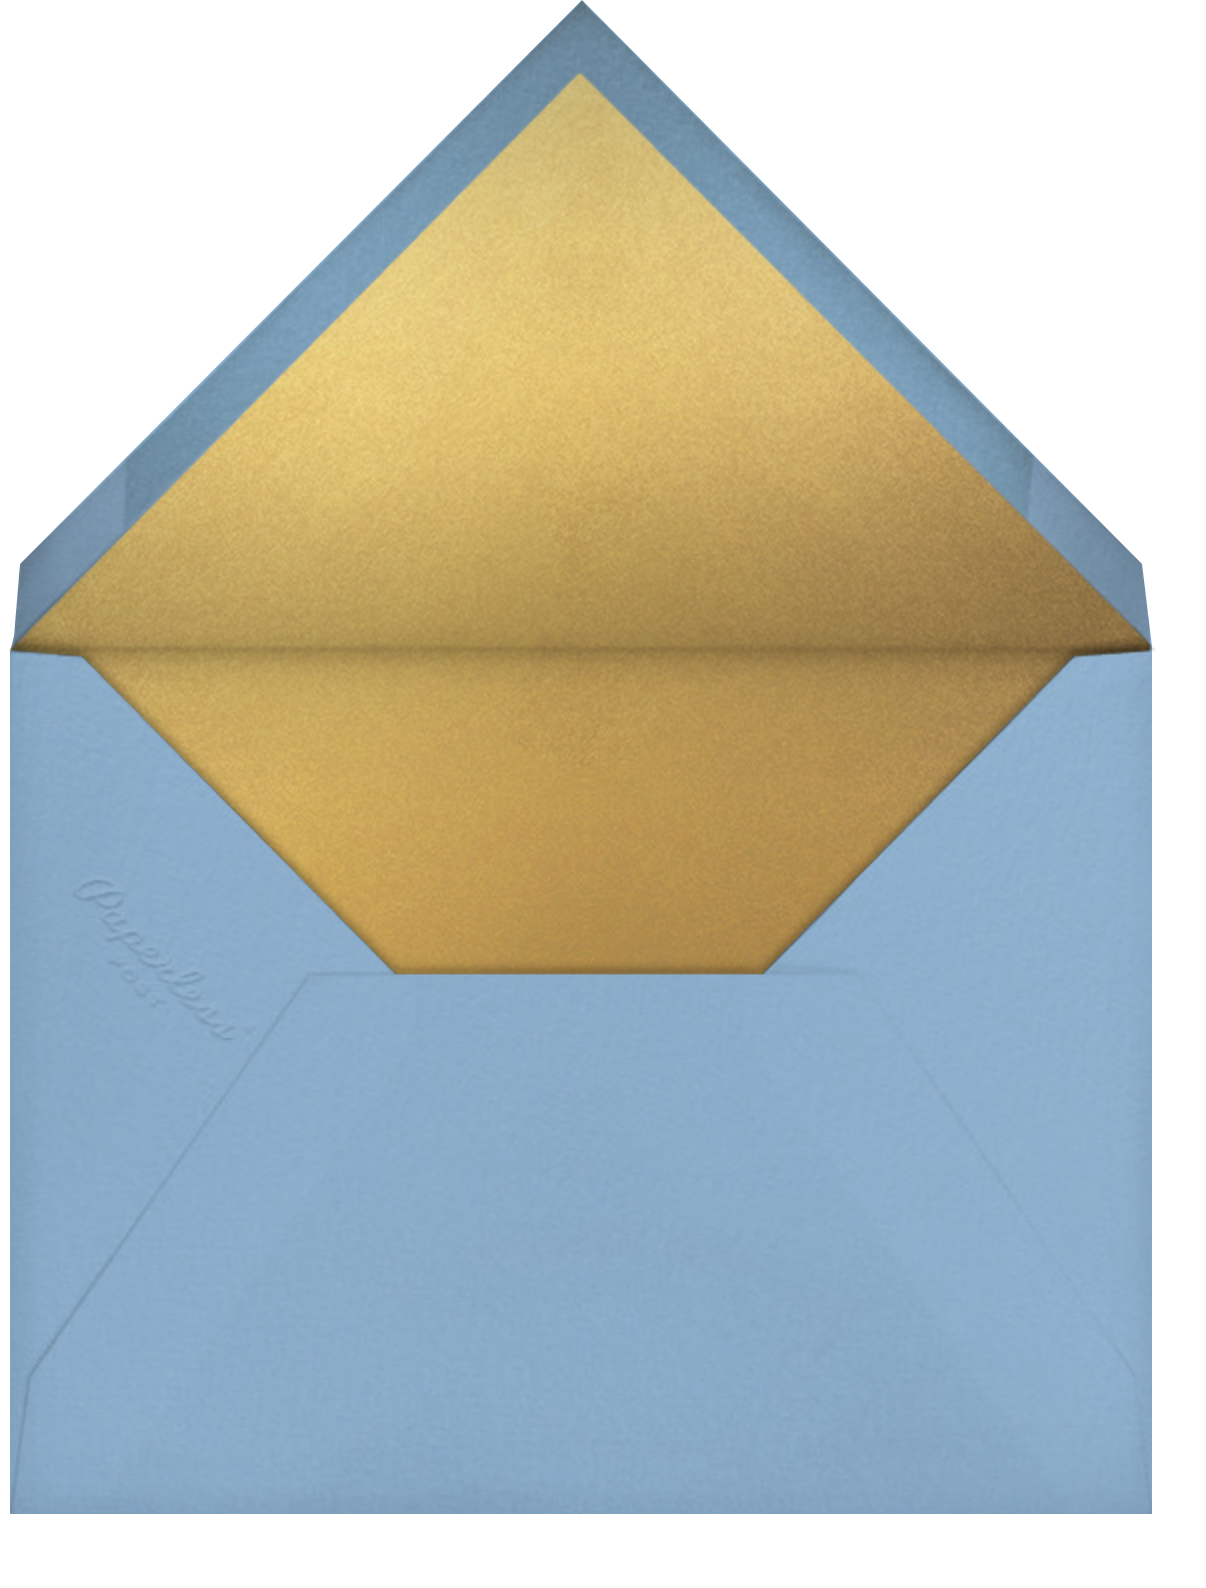 Concentrics - Blue - Paperless Post - Envelope